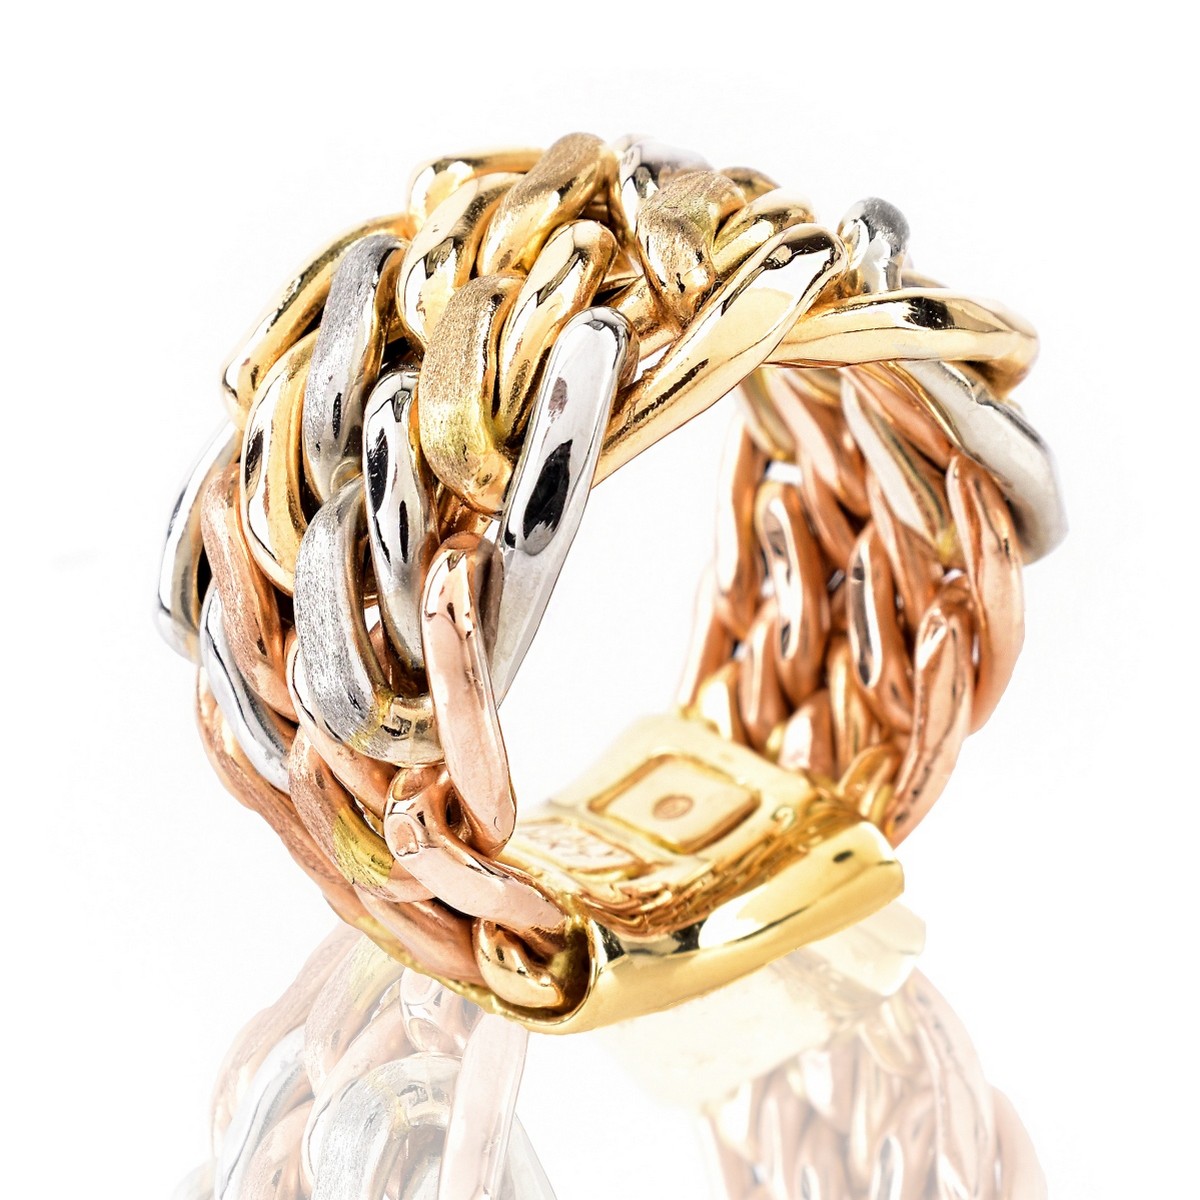 Vintage Italian 14K Gold Ring